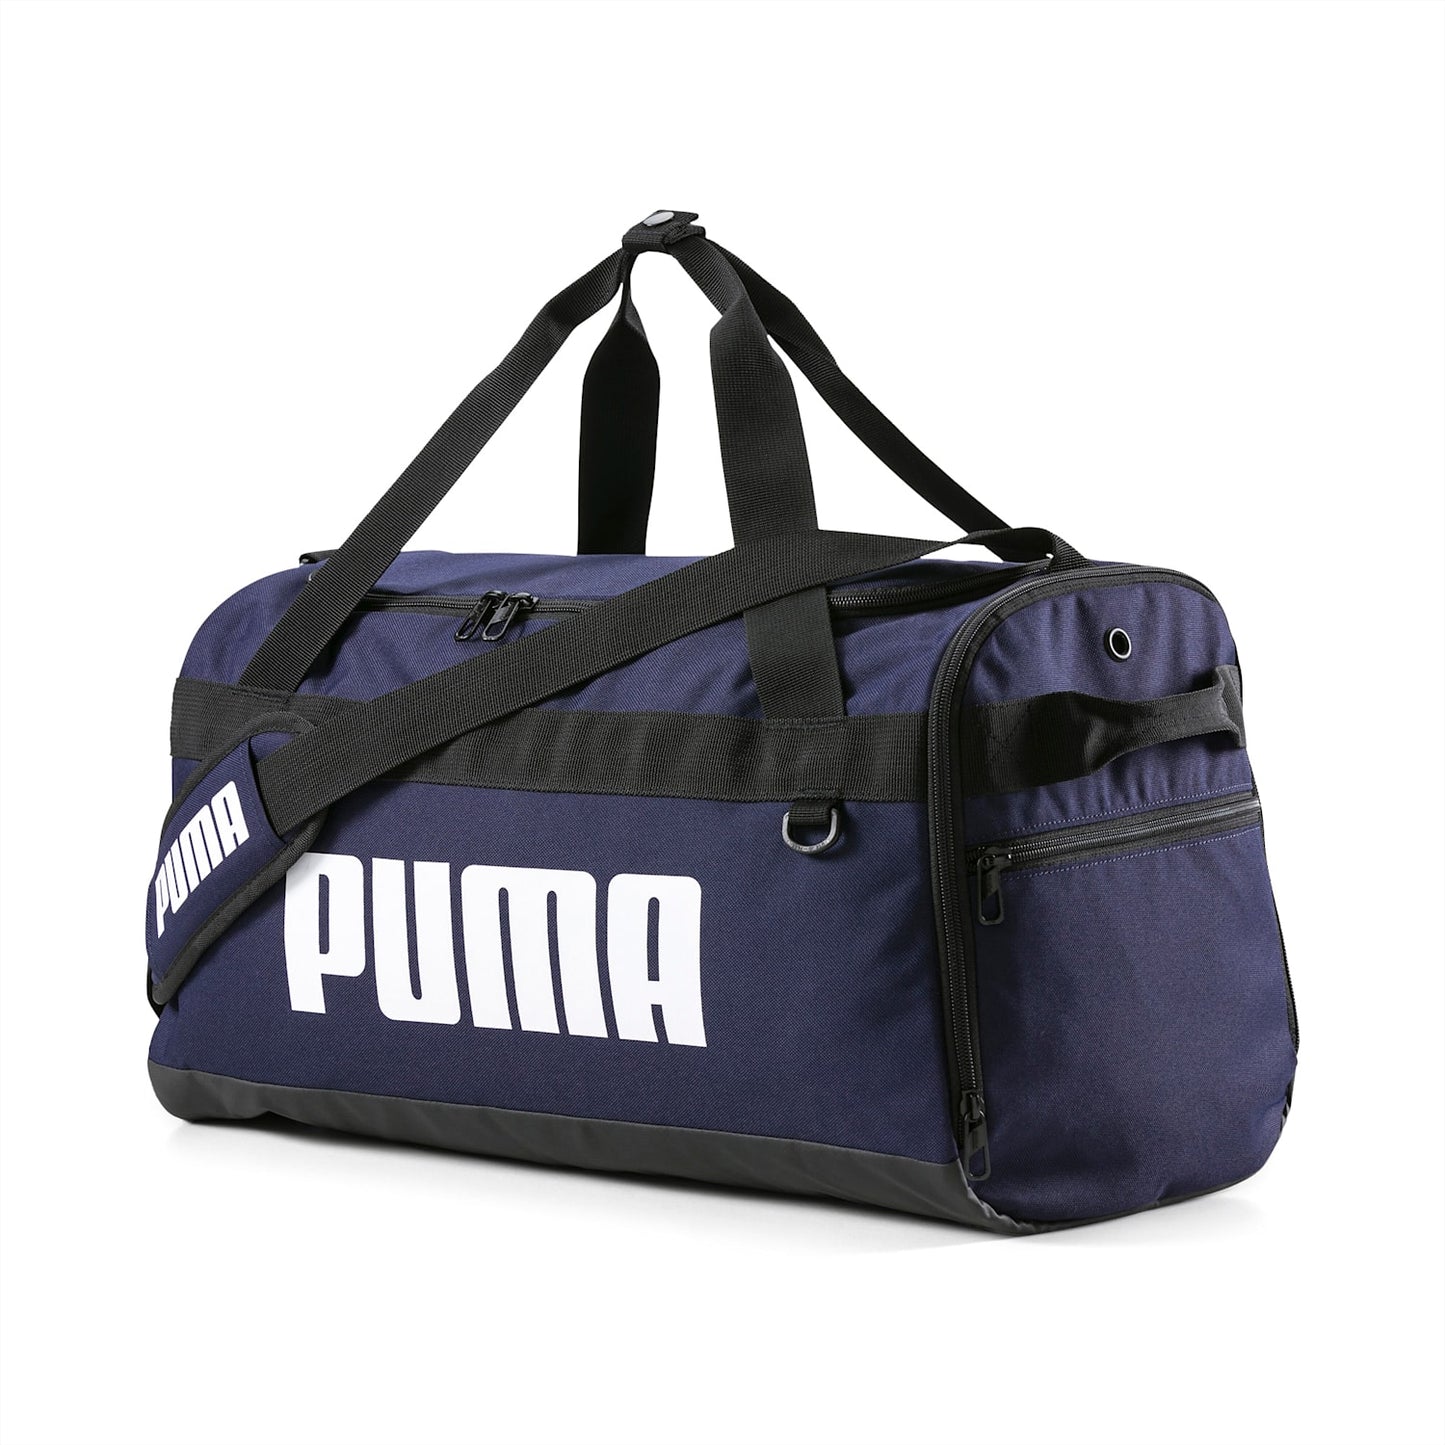 PUMA Challenger Small Unisex Duffel Bag-076620 02